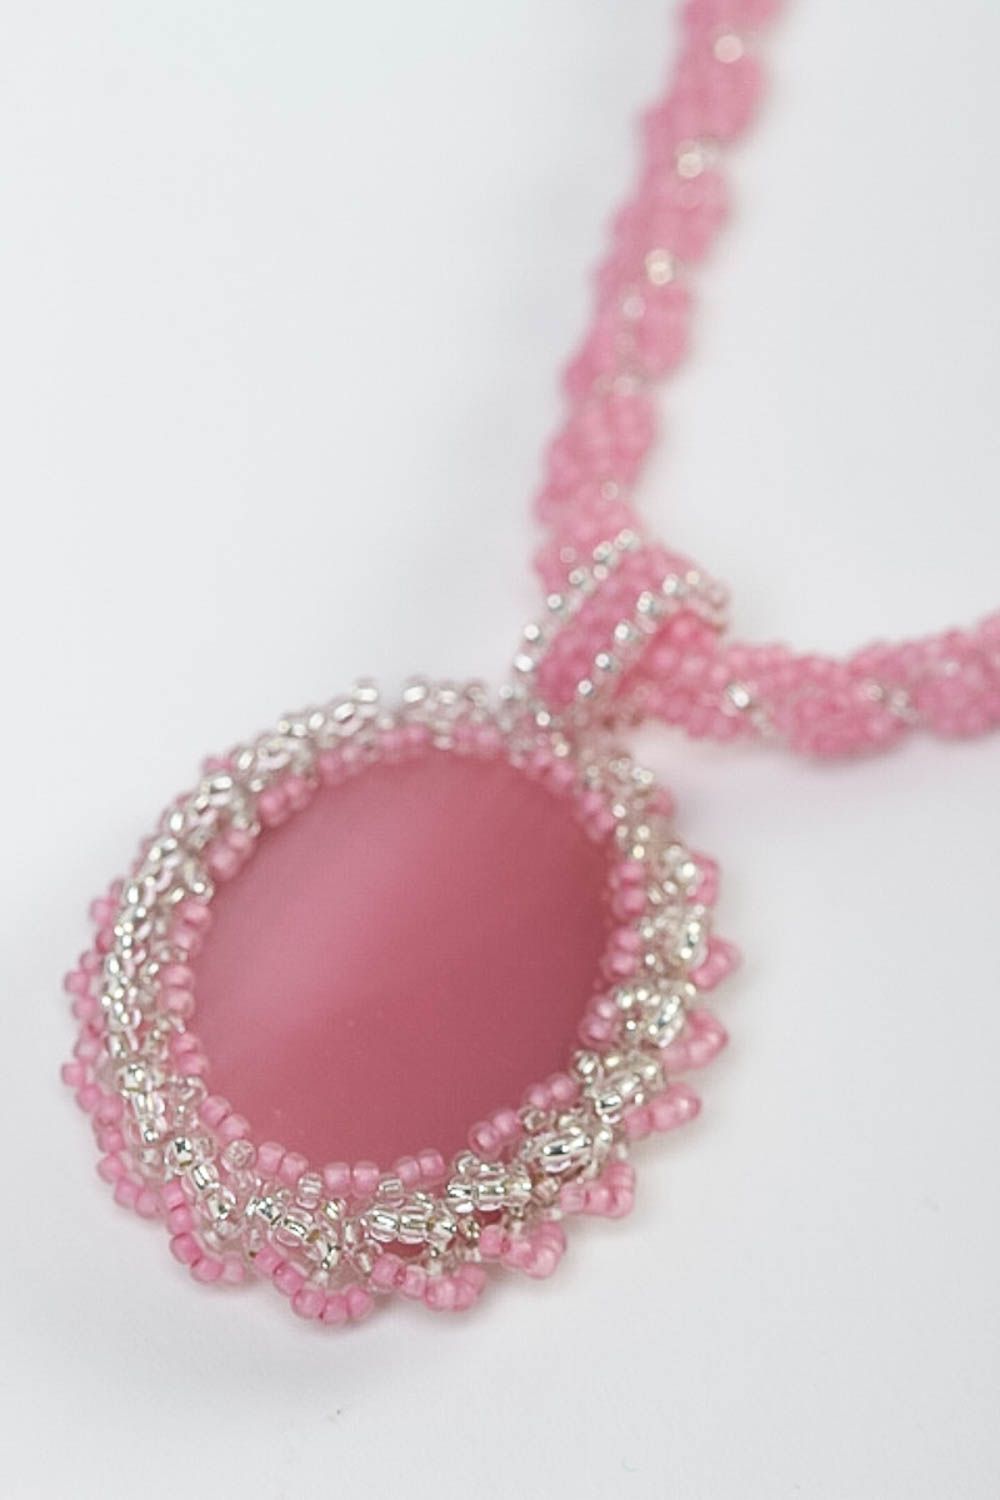 Stylish handmade beaded necklace gemstone pendant necklace jewelry designs photo 3